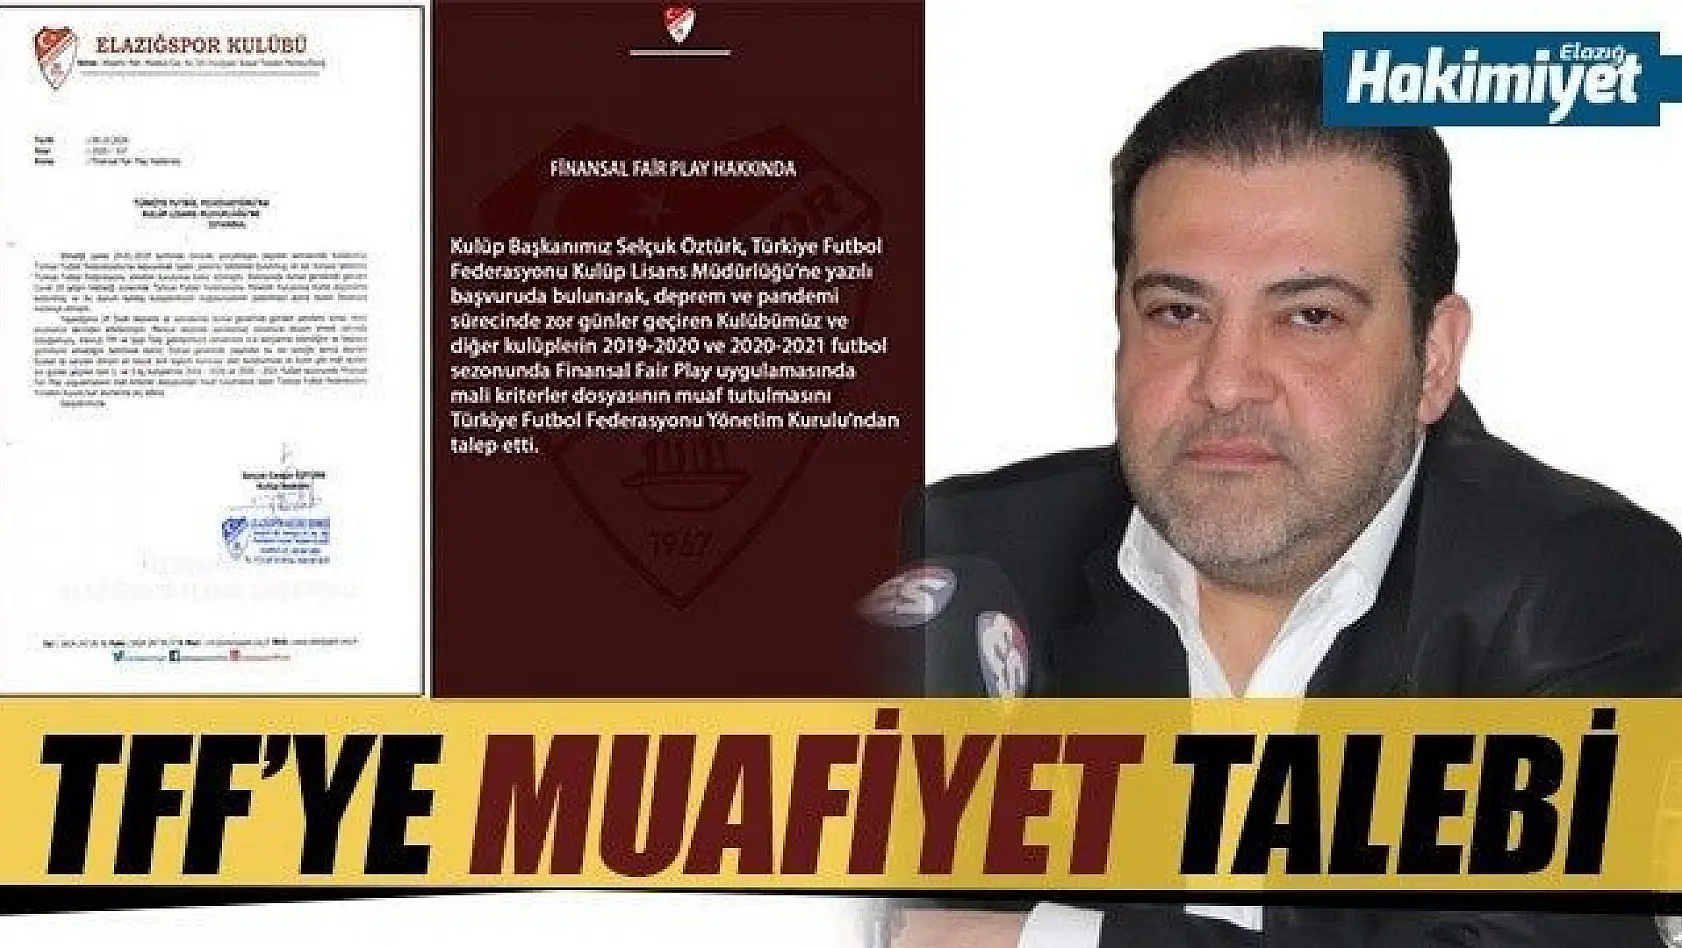 Elazığspor'dan, TFF'ye muafiyet talebi